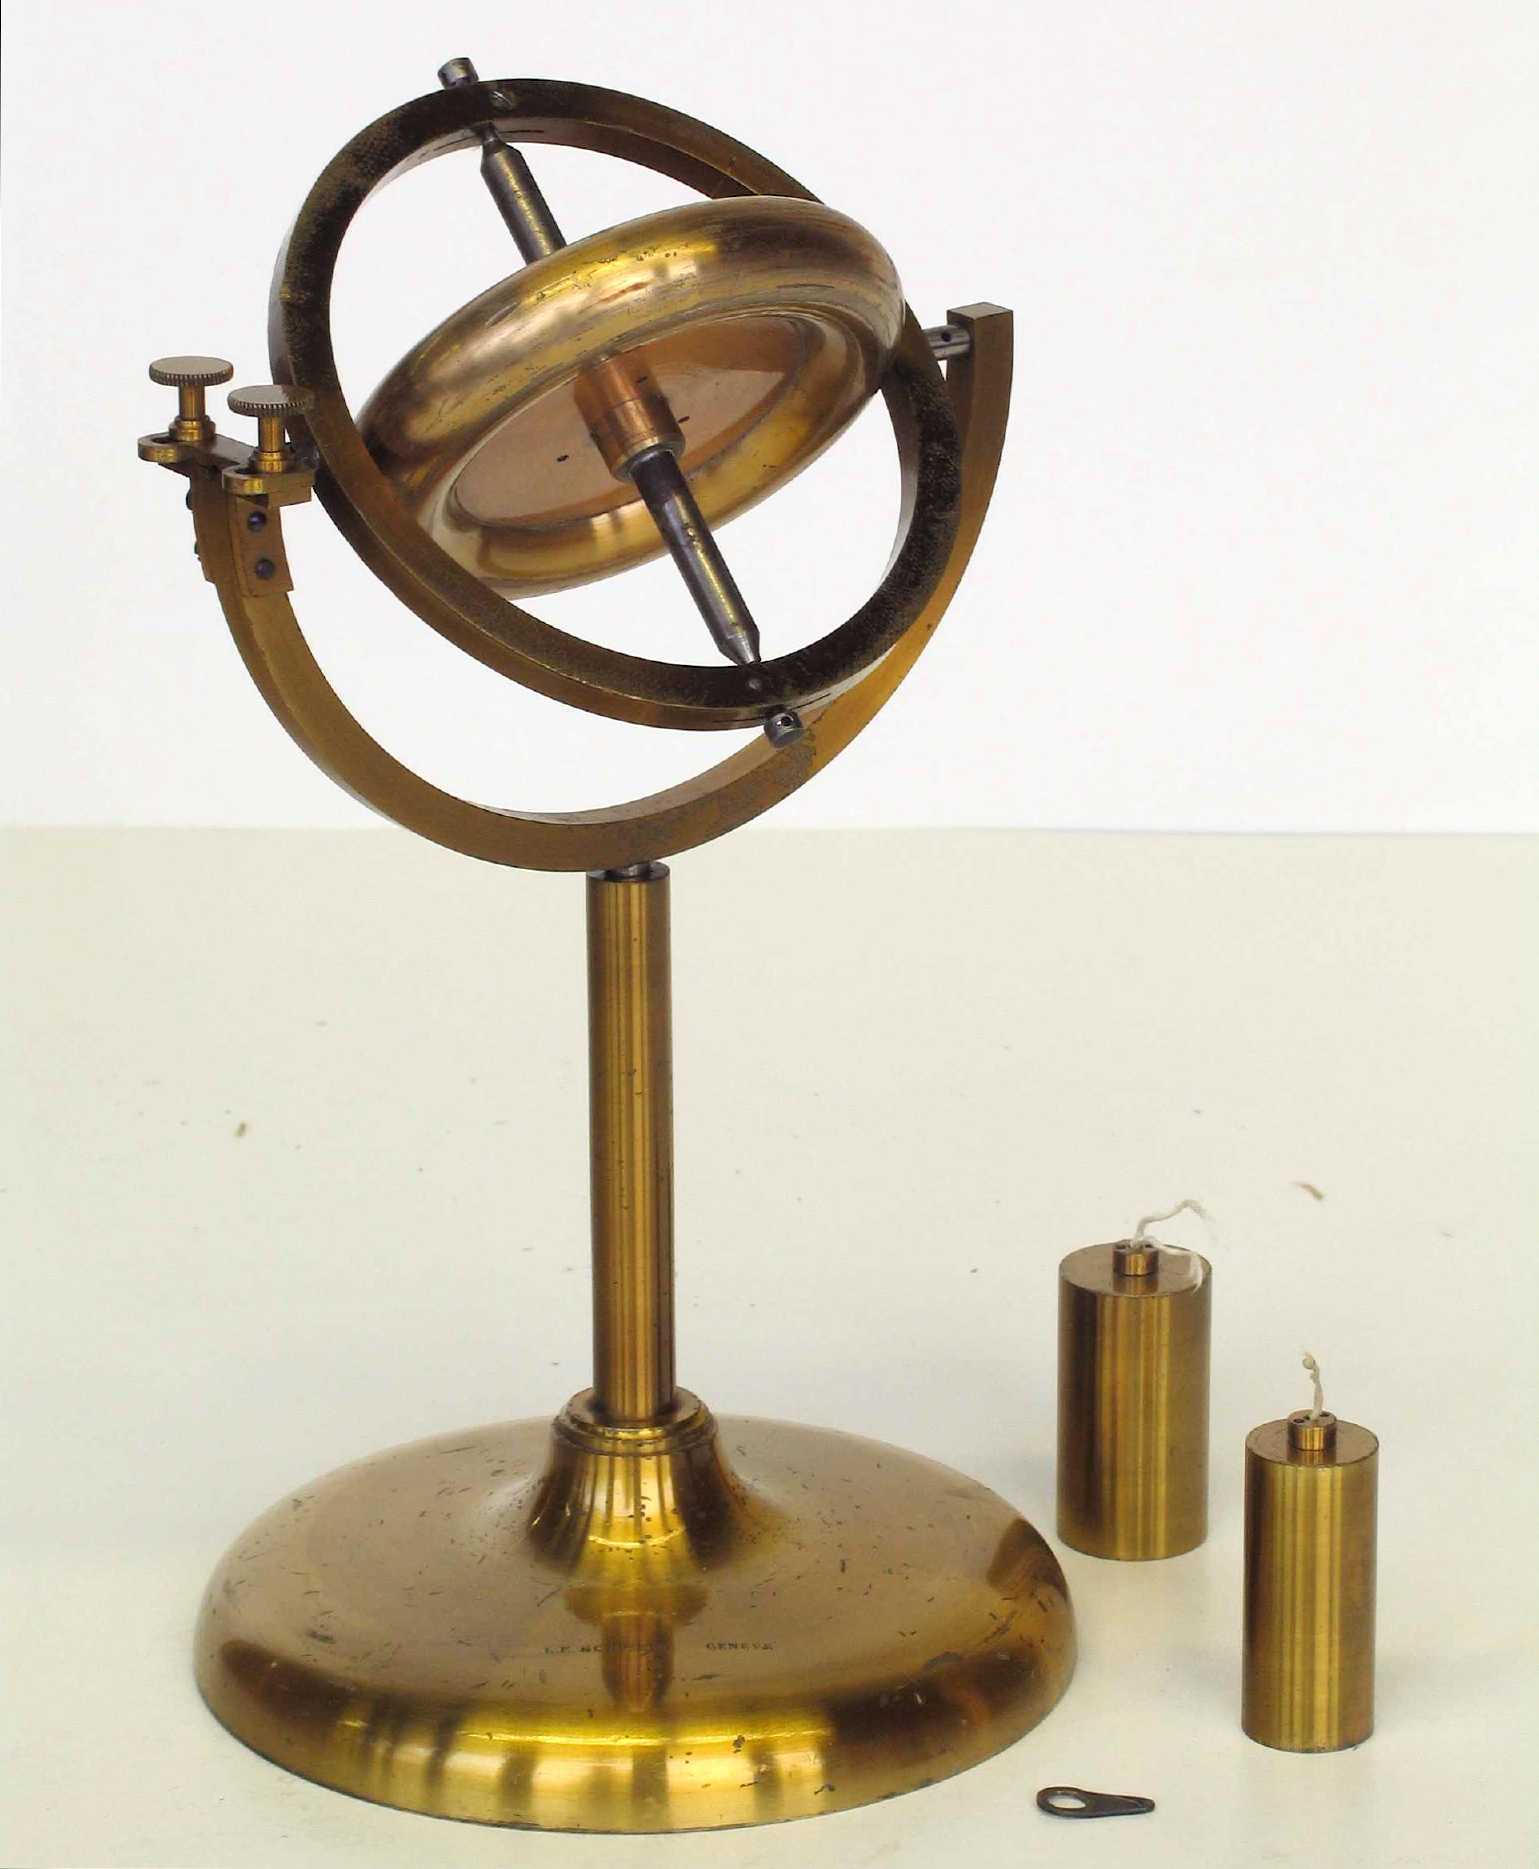 Gyroscope de démonstration
(gyroscope de Foucault)